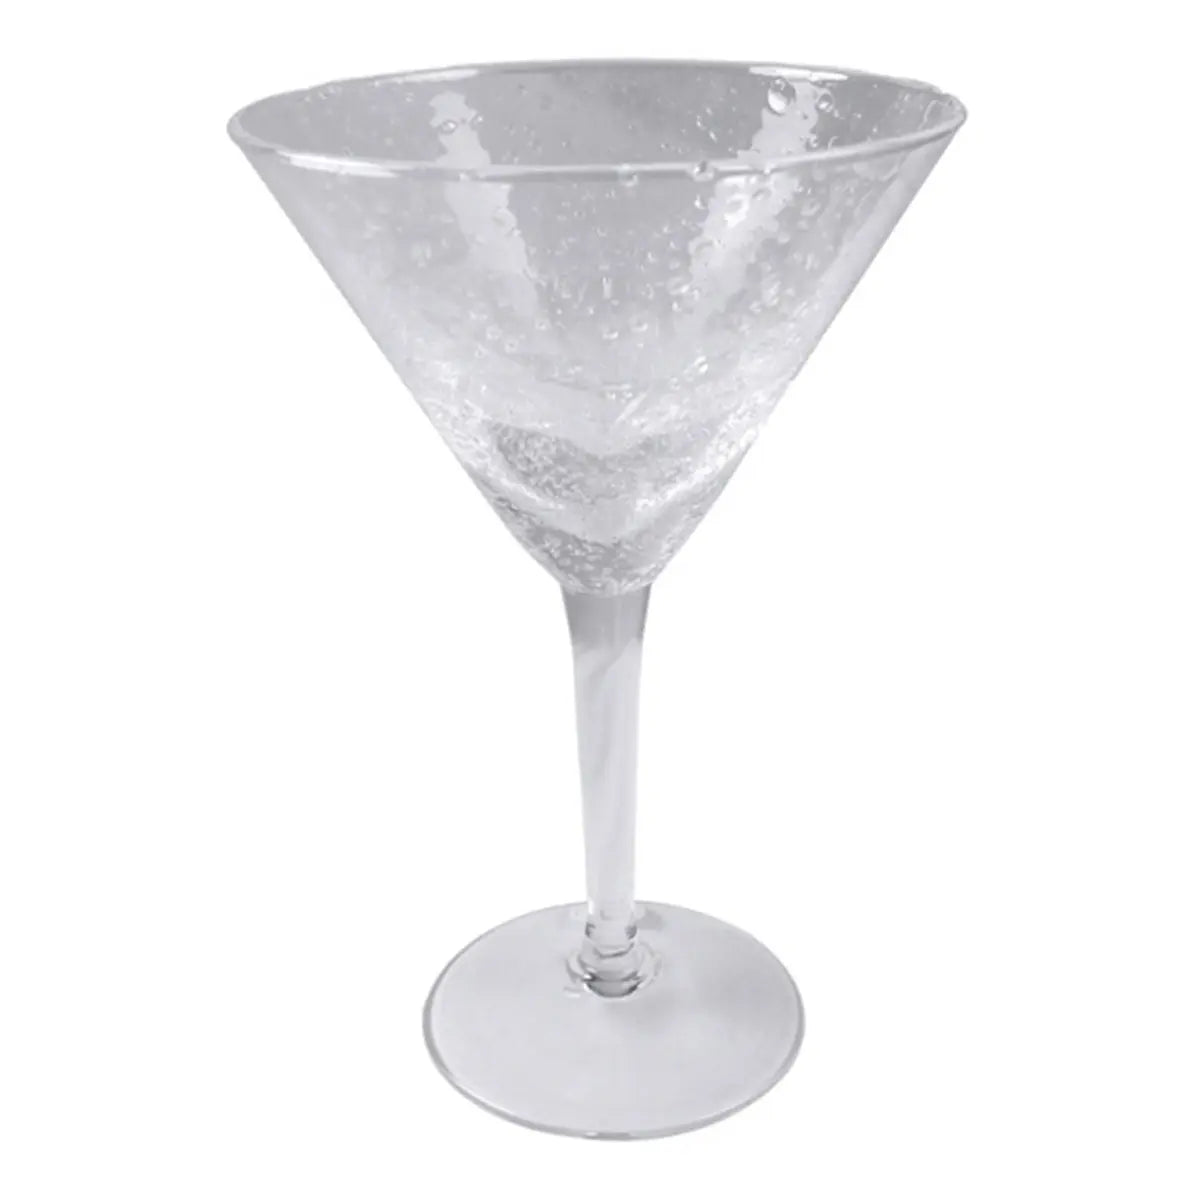 Mariposa Bellini Cocktail Glass